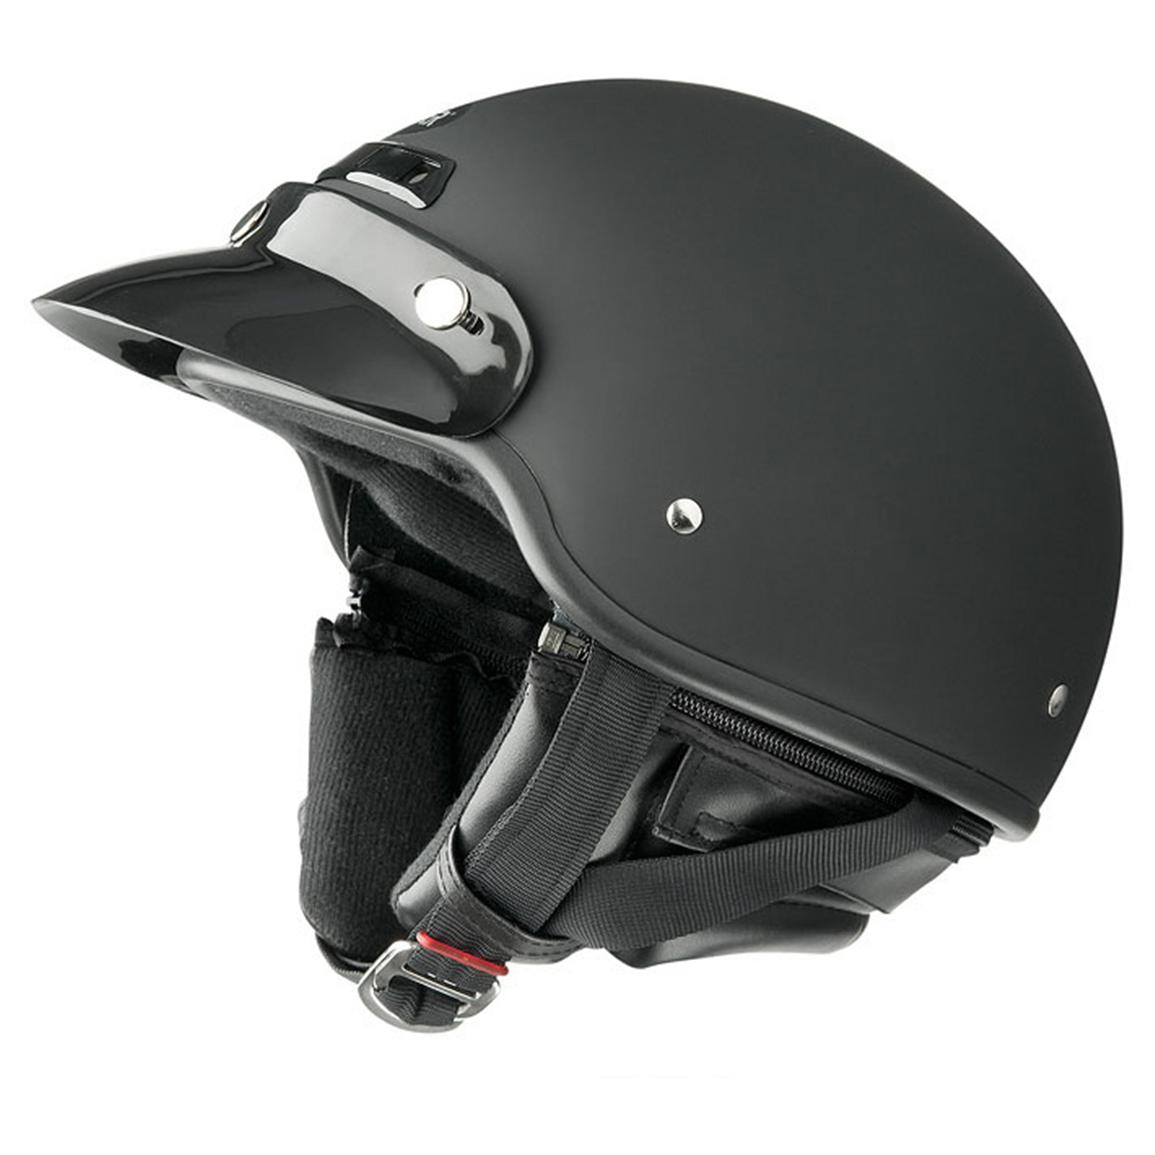 Raider Deluxe Half Motorcycle Helmet - 216793, Helmets & Goggles at Sportsman's Guide